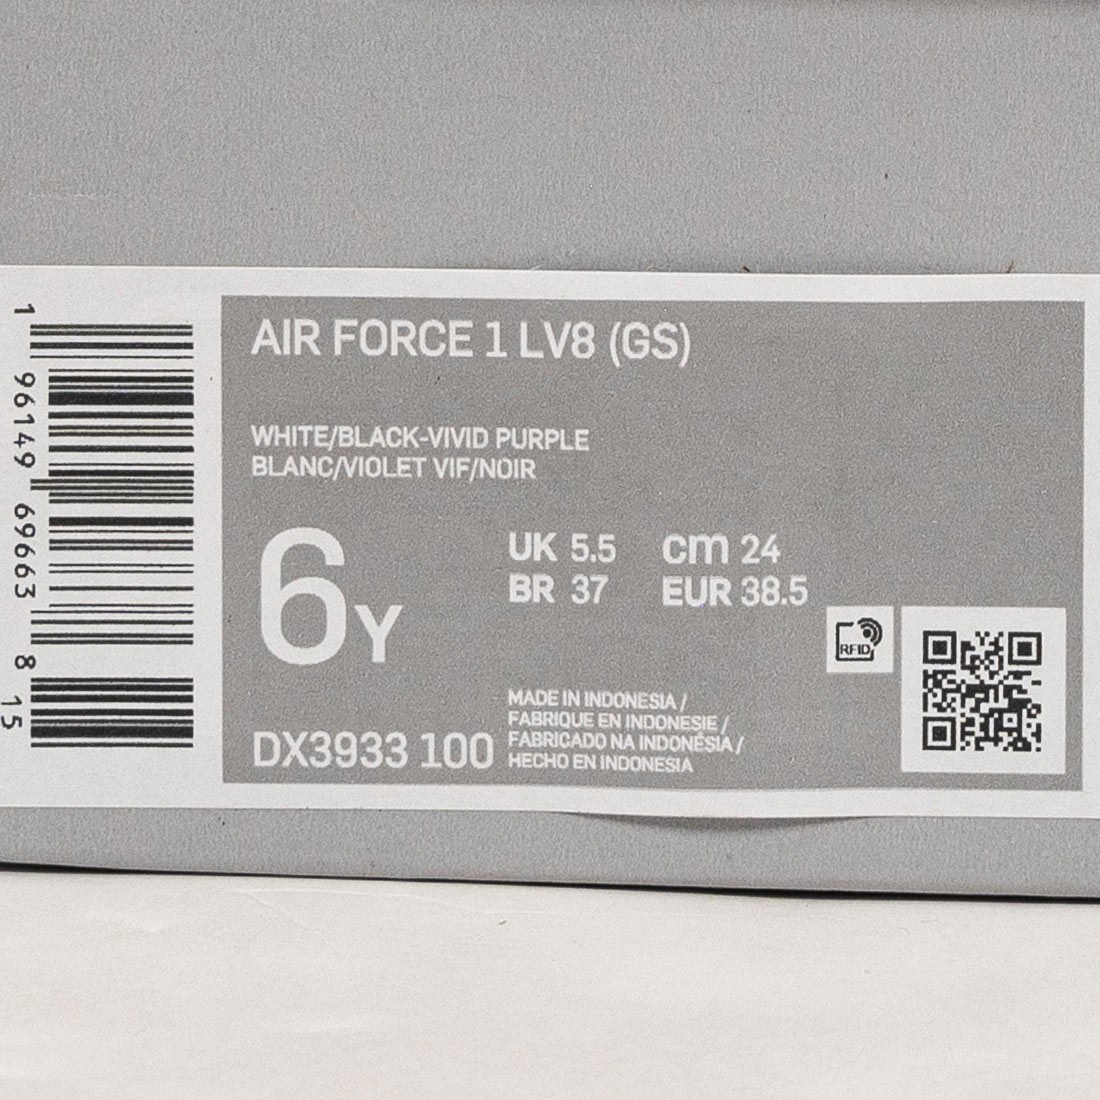 Nike Air Force 1 LV8 GS White/Black-Vivid Purple Size